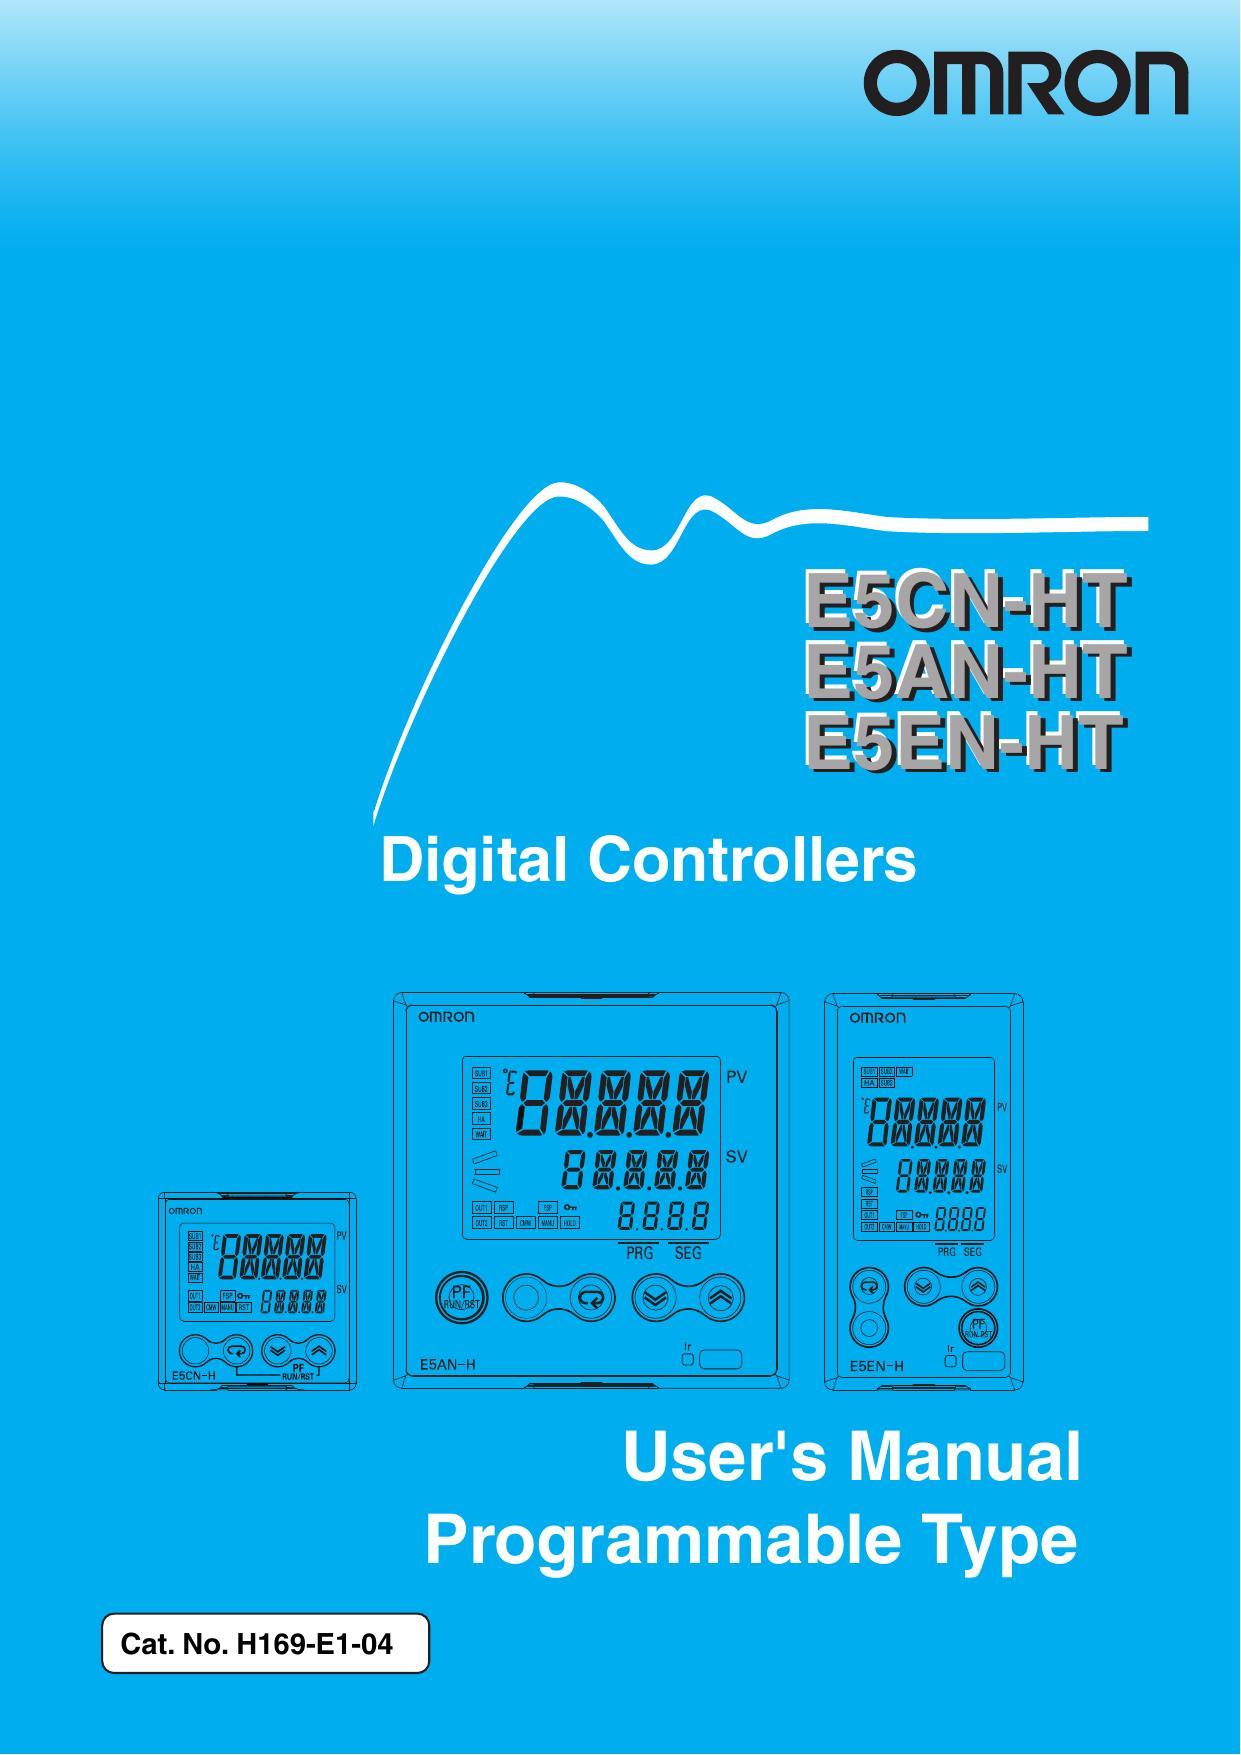 omron-e5cn-ht-e5an-ht-e5en-ht-digital-controllers-users-manual-programmable-type.pdf